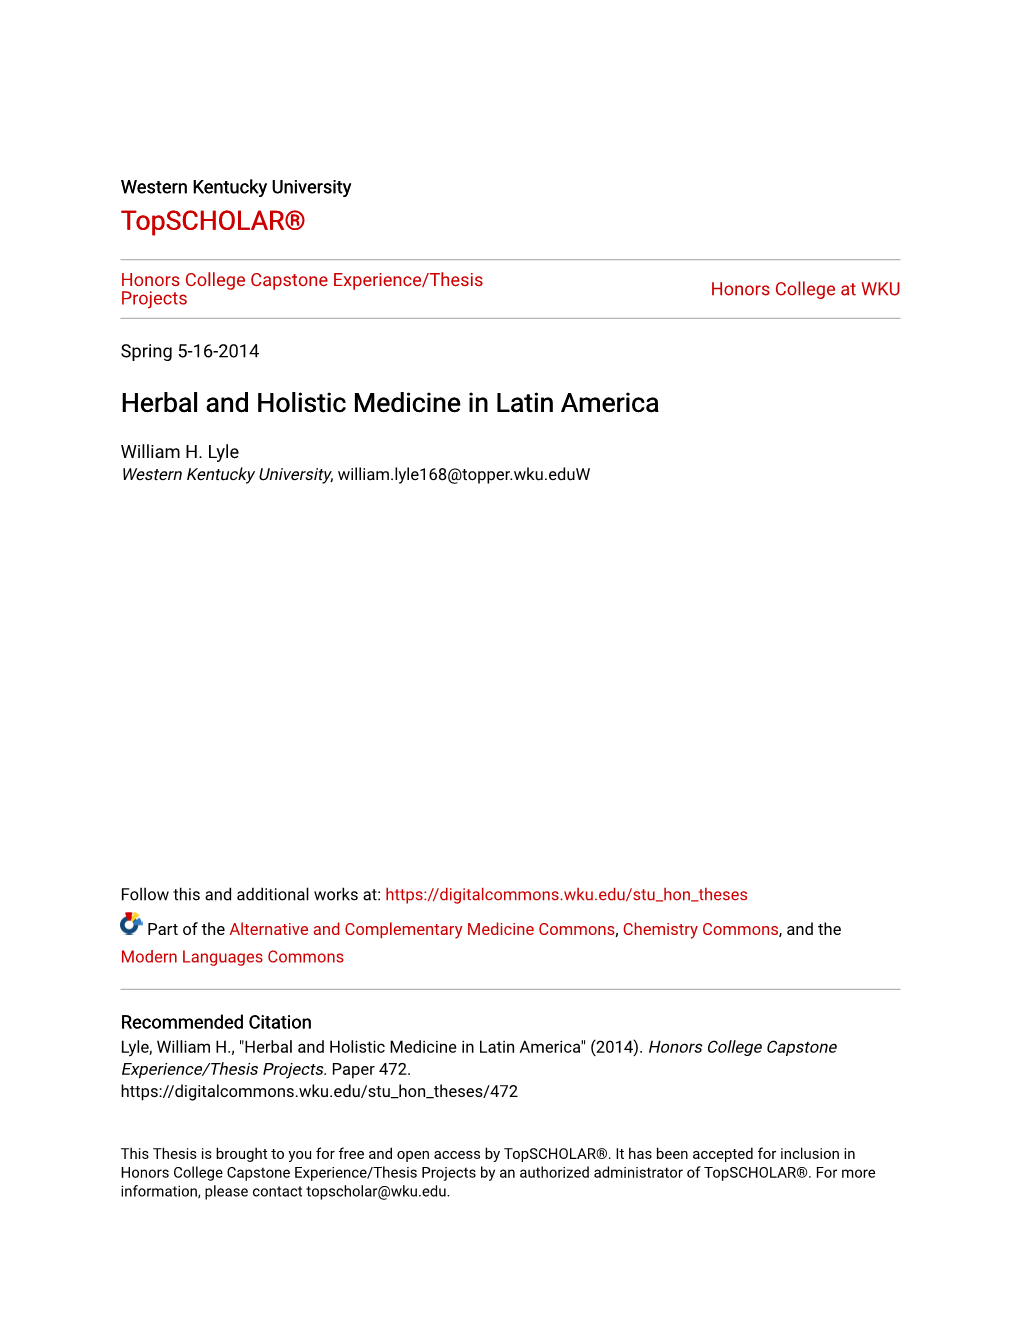 Herbal and Holistic Medicine in Latin America